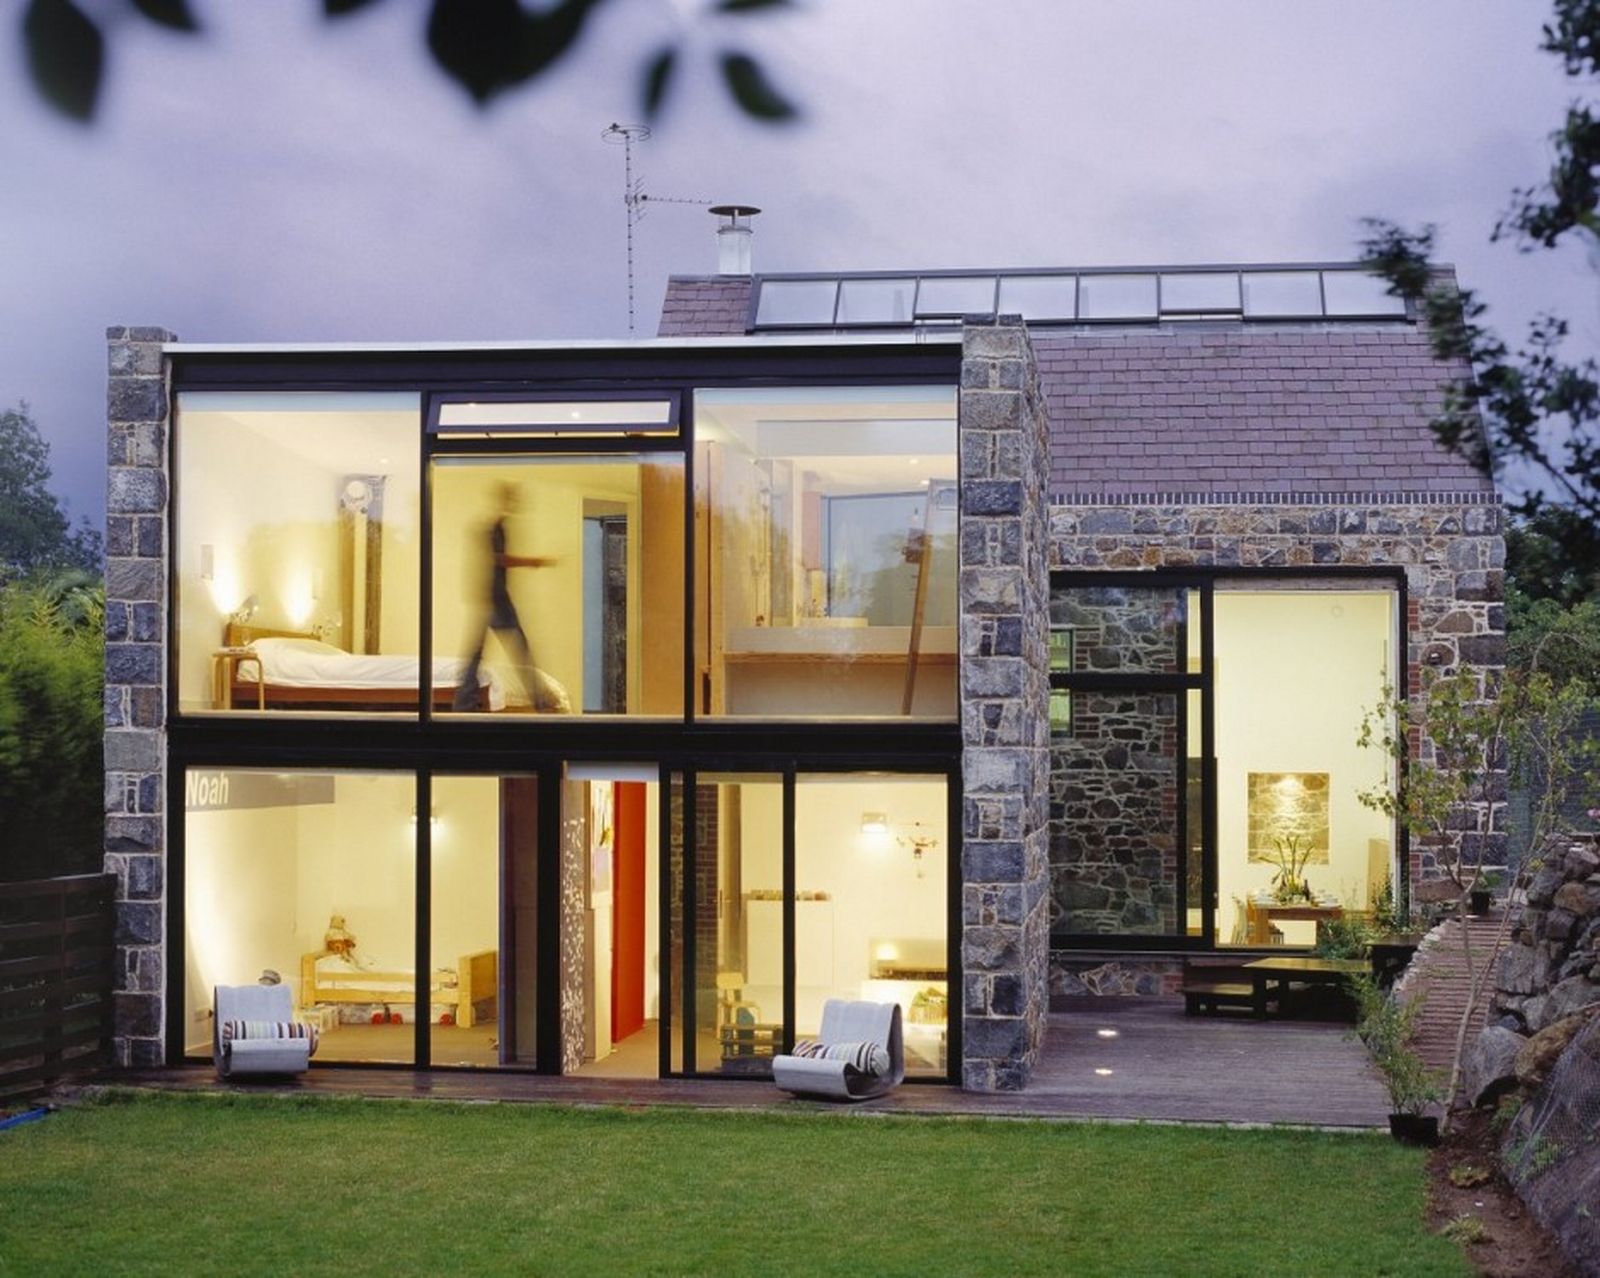 30 Contemporary Home Exterior Design Ideas – The WoW Style